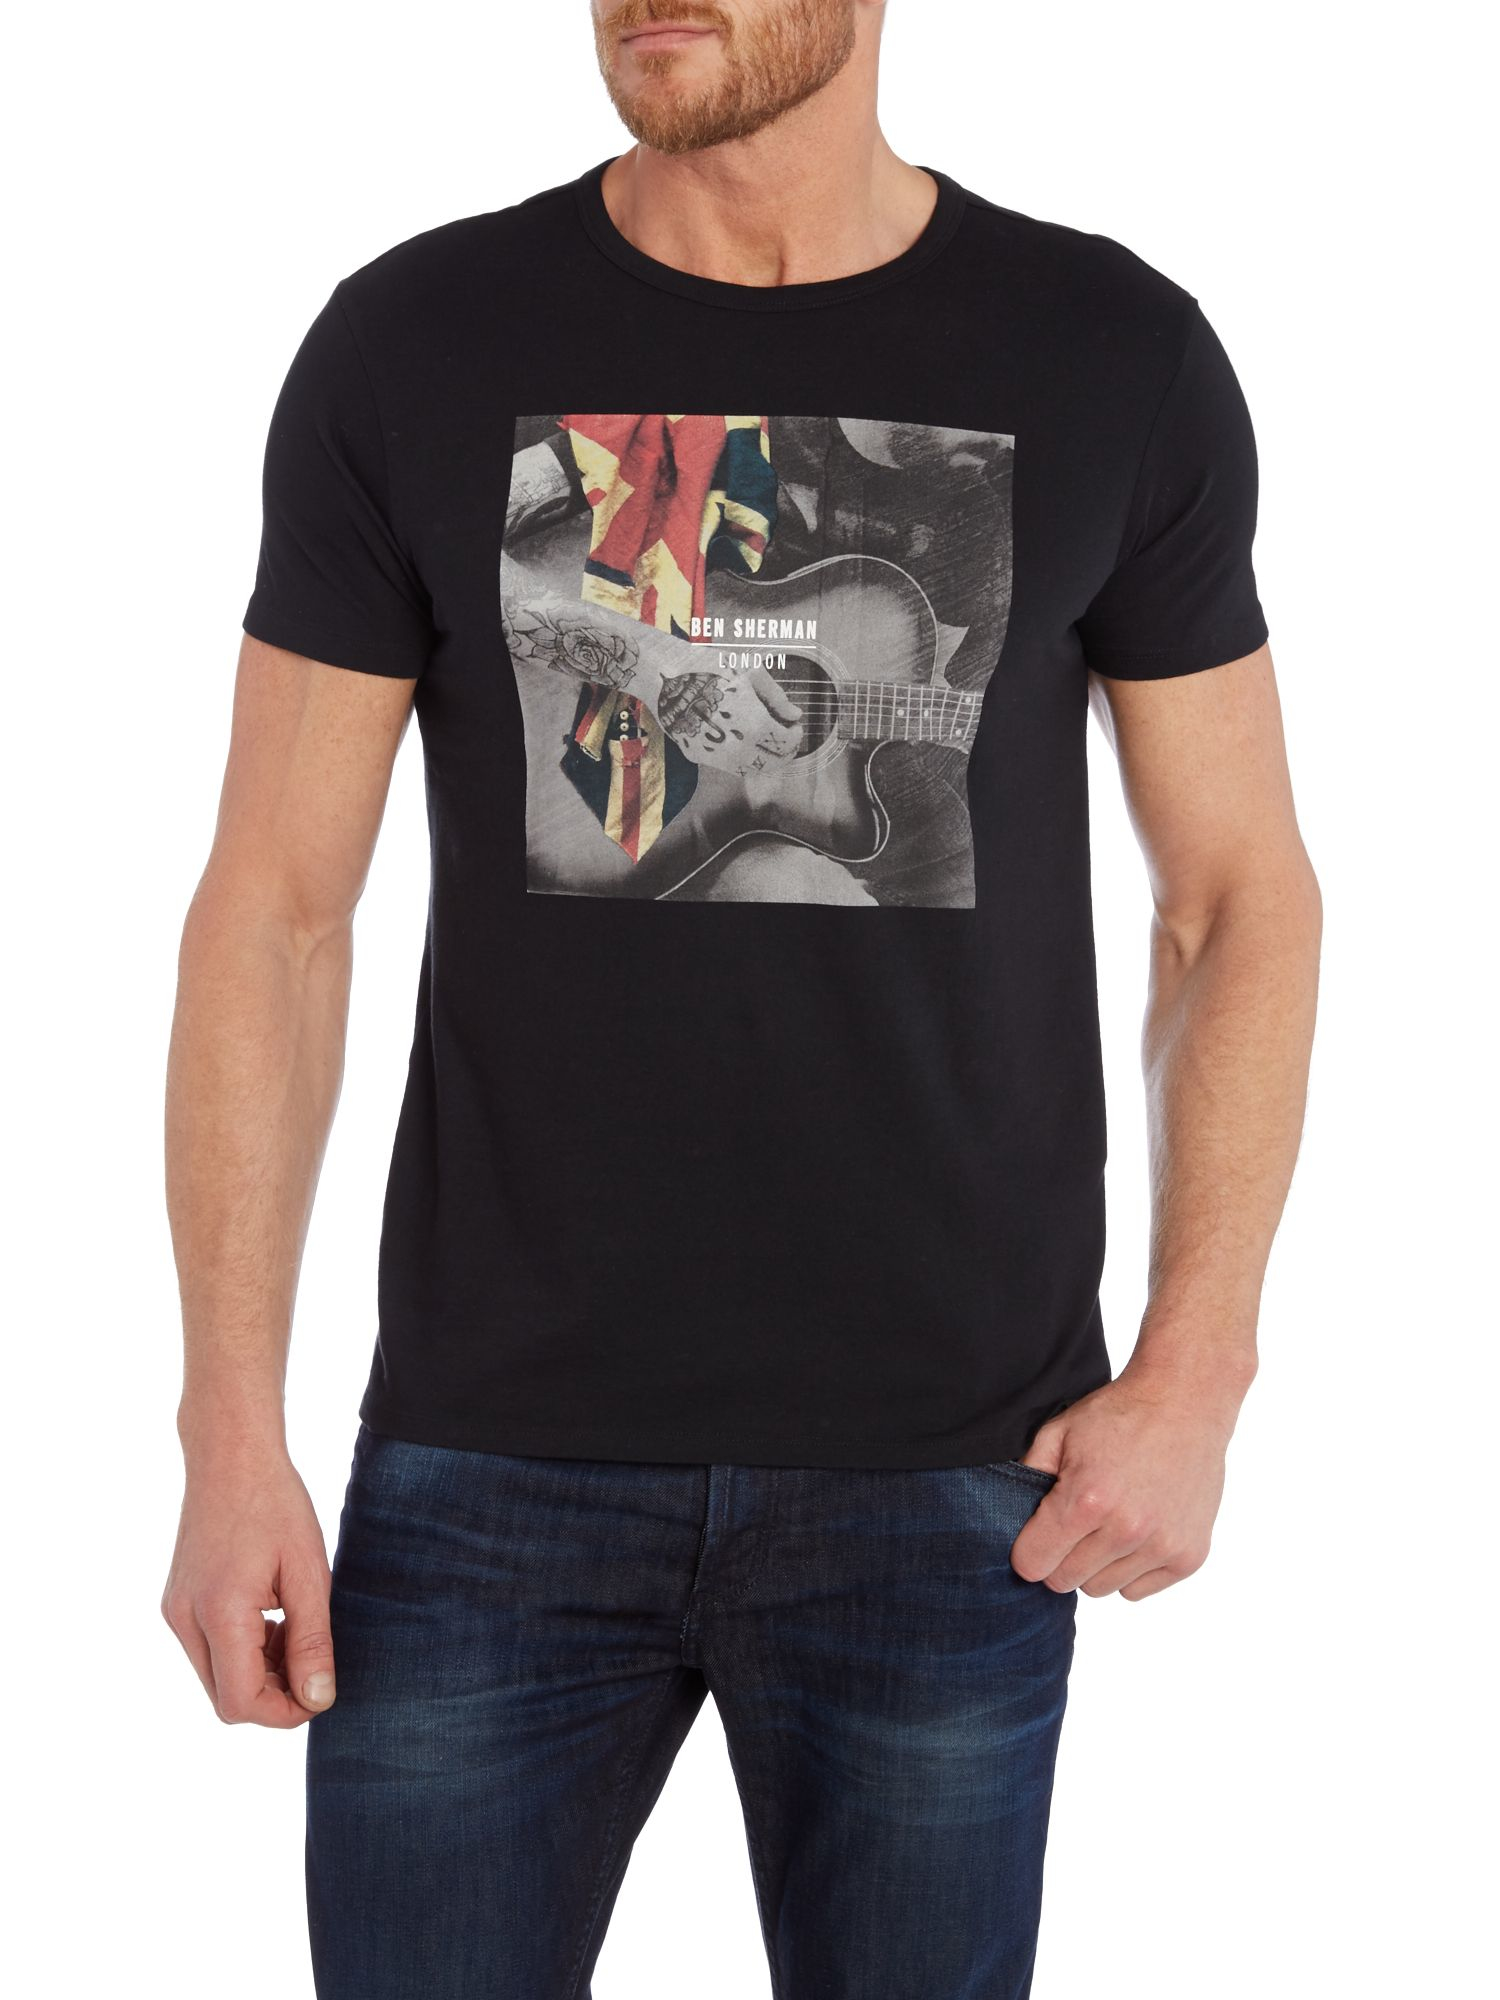 Ben Sherman Cotton Union Jack Guitar Print T-shirt in Black for Men - Lyst